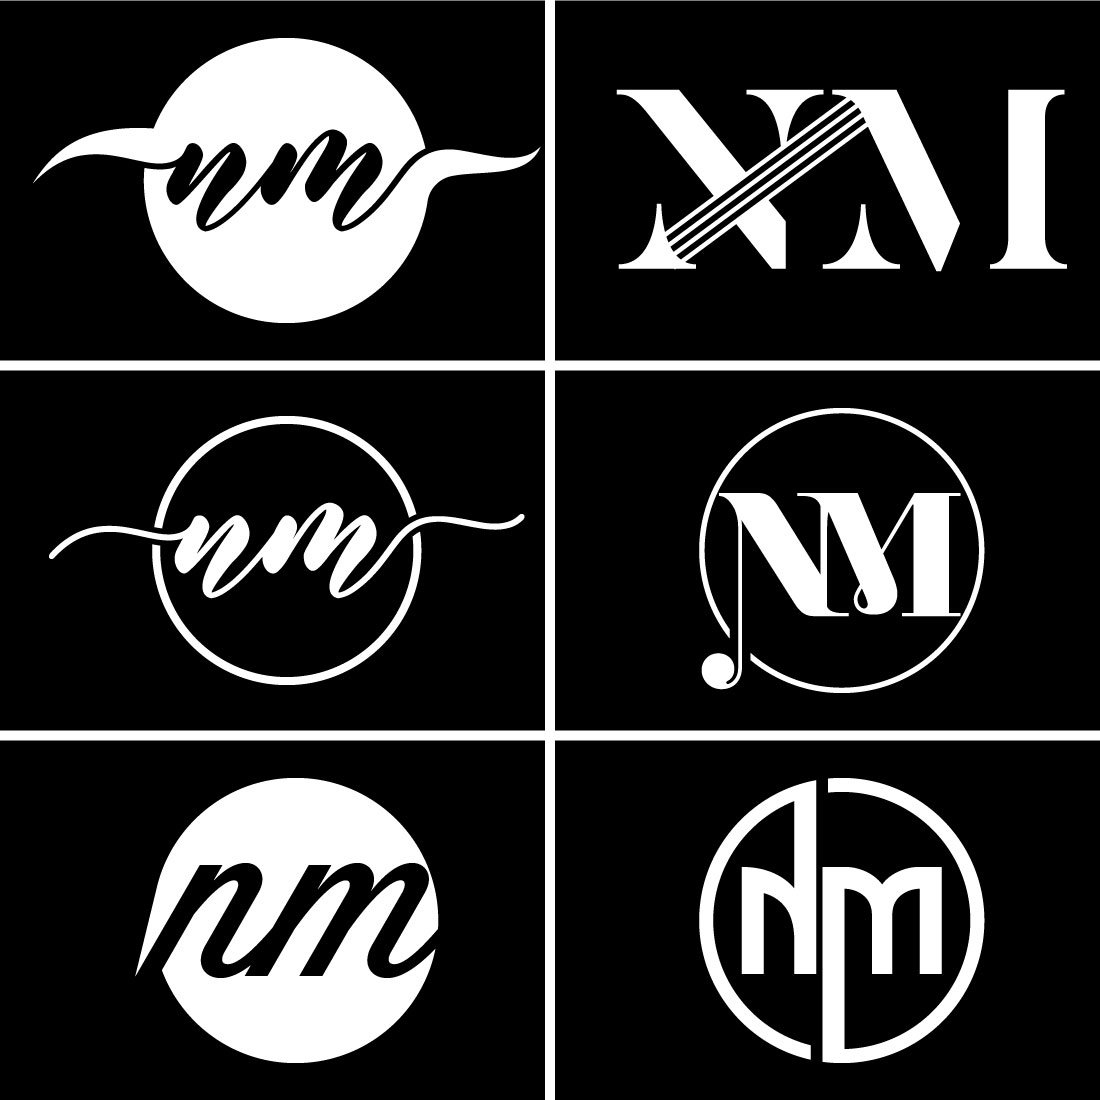 Initial lv letter logo design template luxury Vector Image